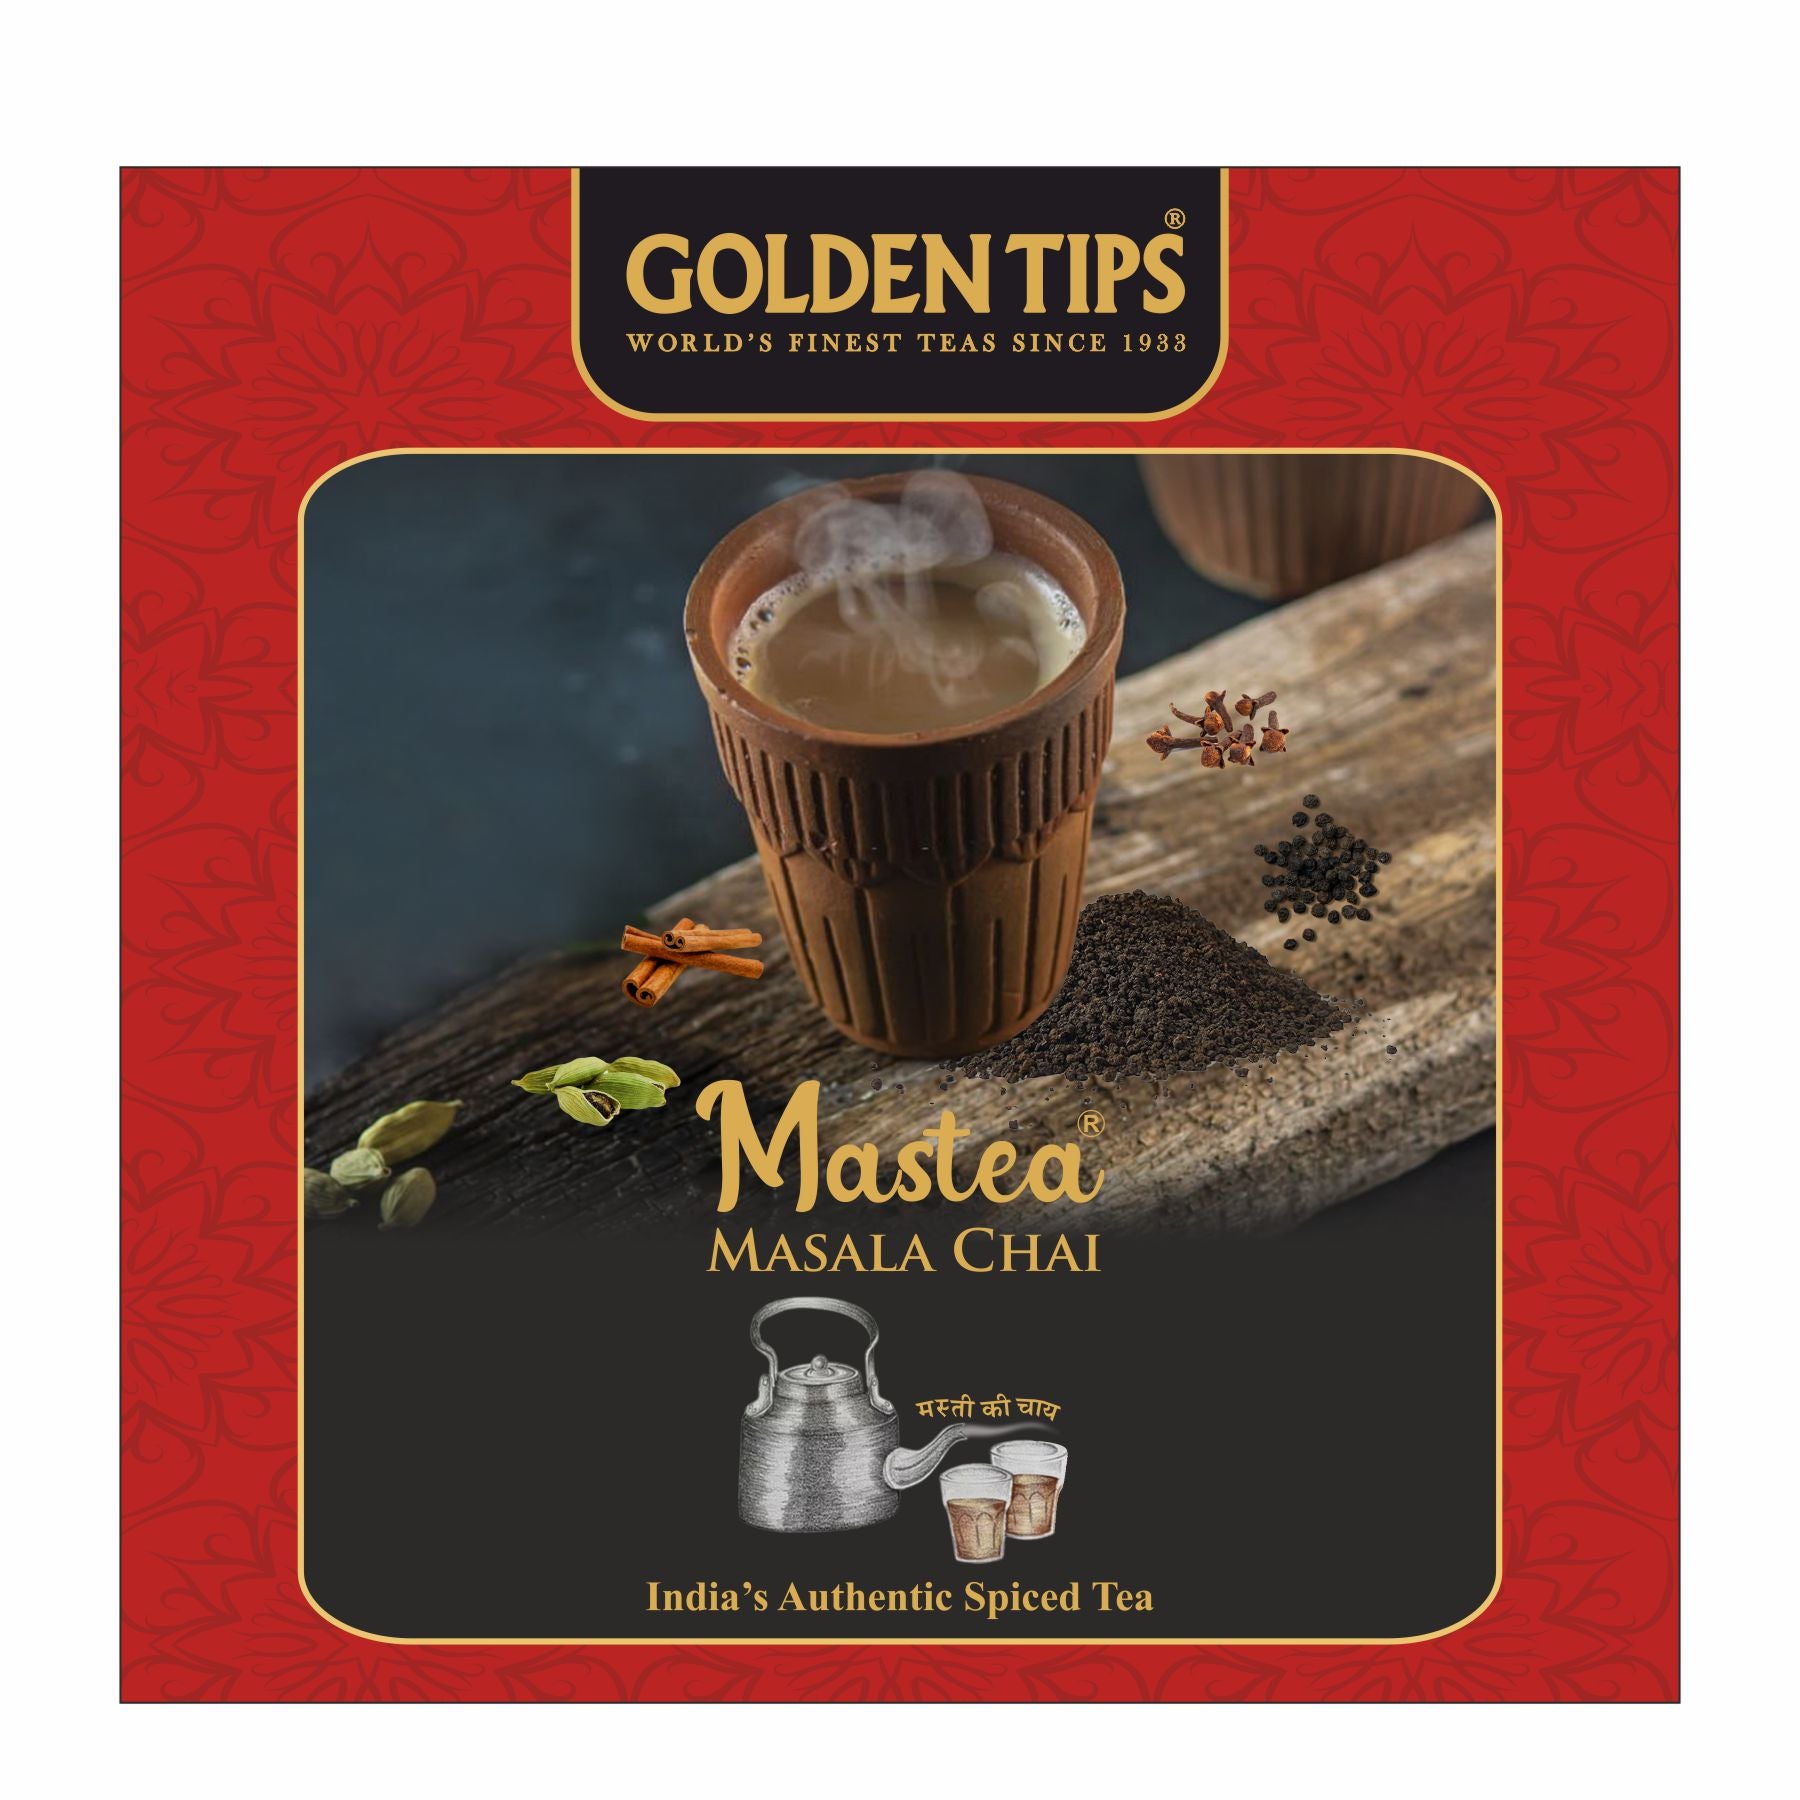 Masala Chai - India's Authentic Spiced Tea - Golden Tips Tea (India)